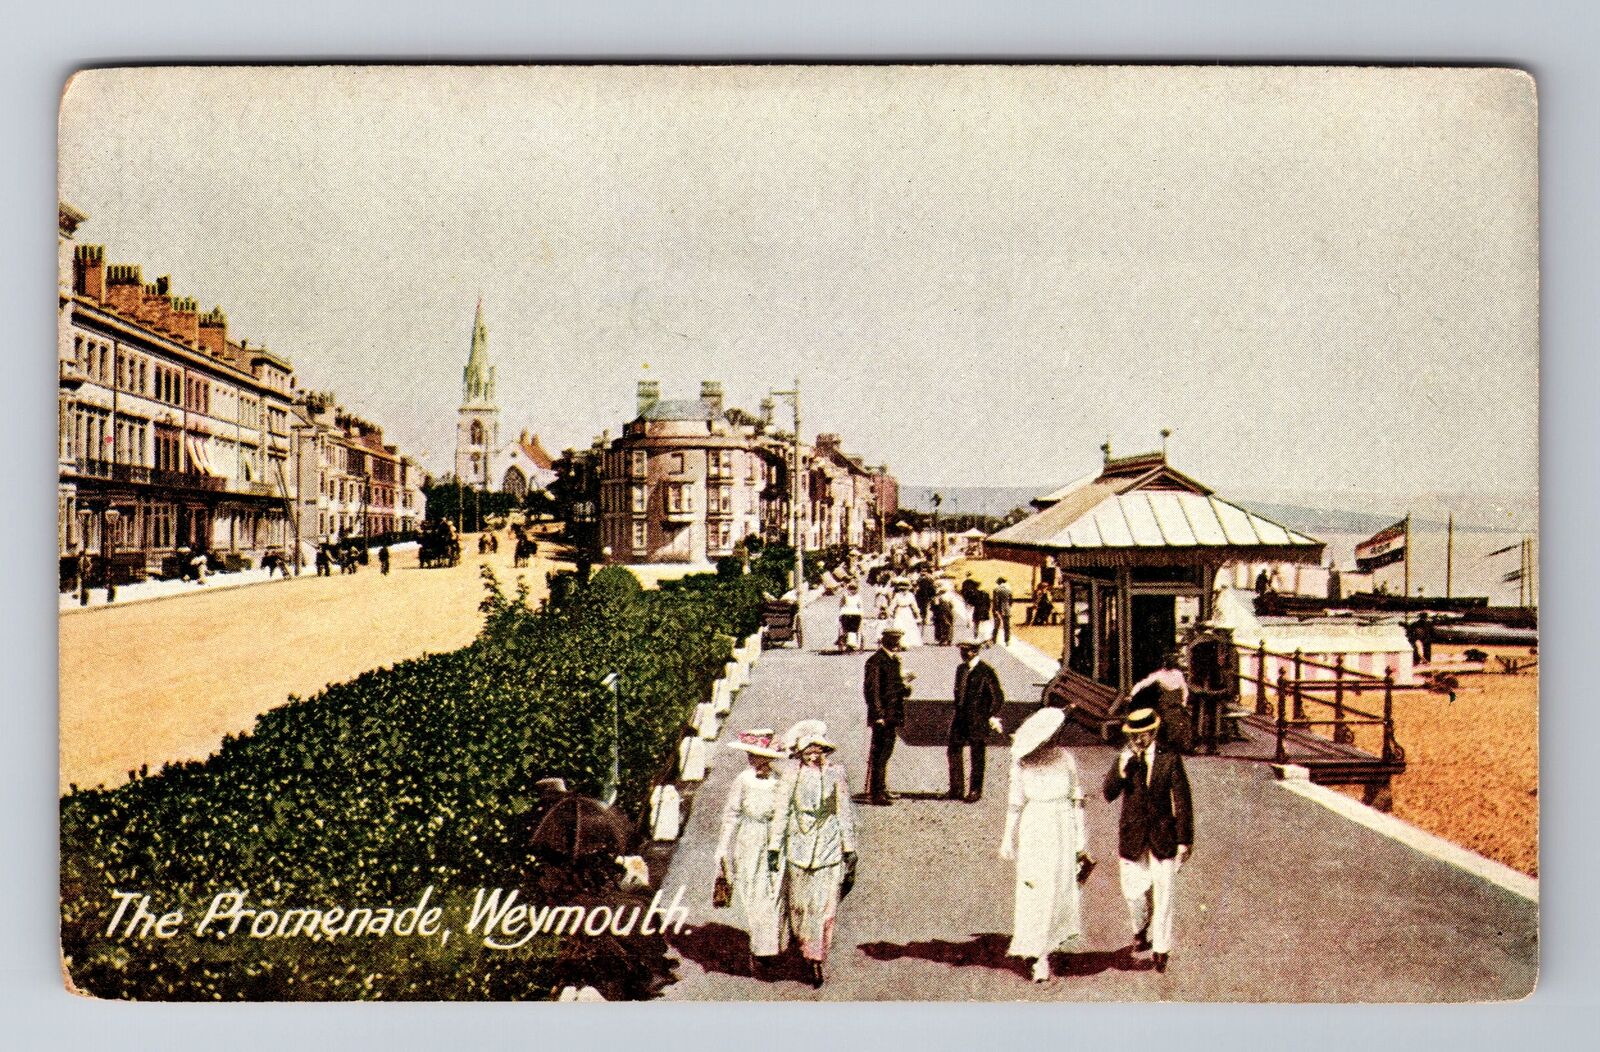 London-England, Weymouth, The Promenade, Antique, Vintage Souvenir Postcard